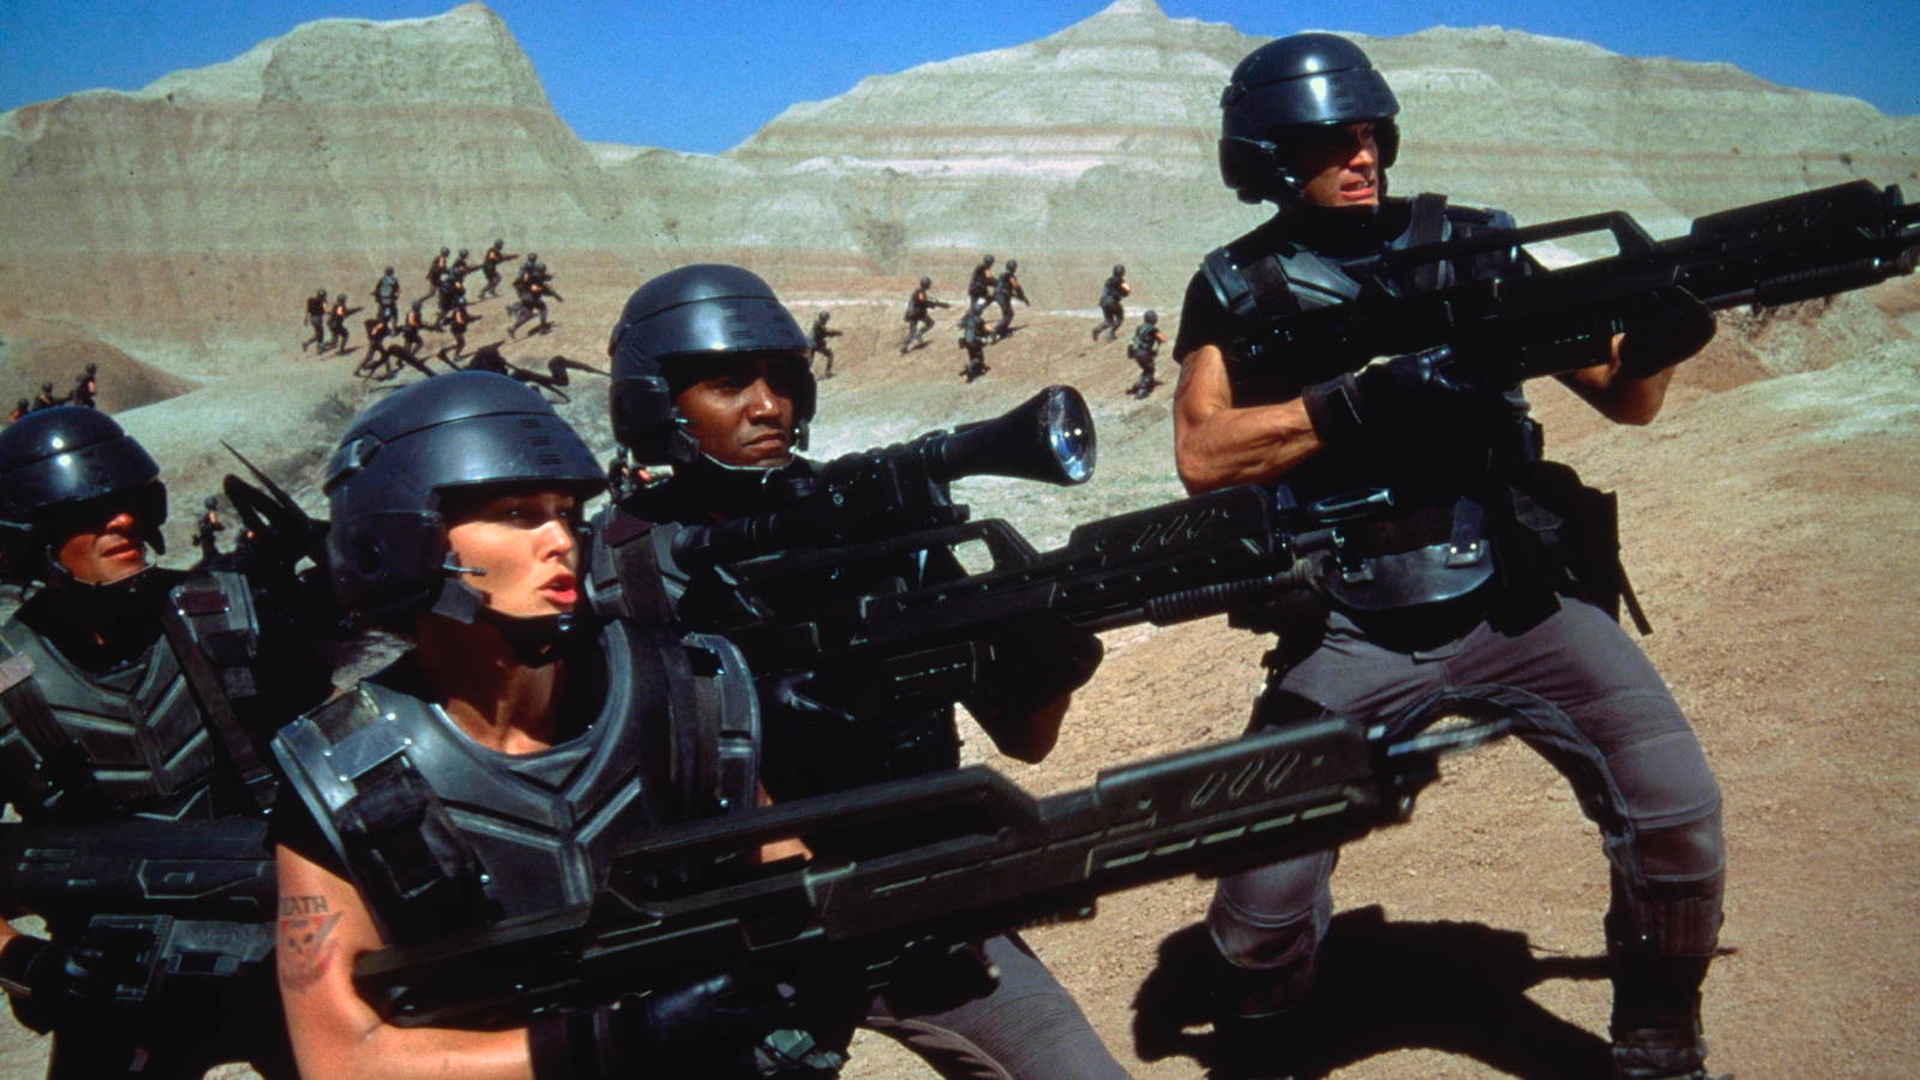 Звезды десанта. Звездный десант Starship Troopers 1997. Звёздный десант солдаты. Звездный десант Верховена. Старшип труперс.